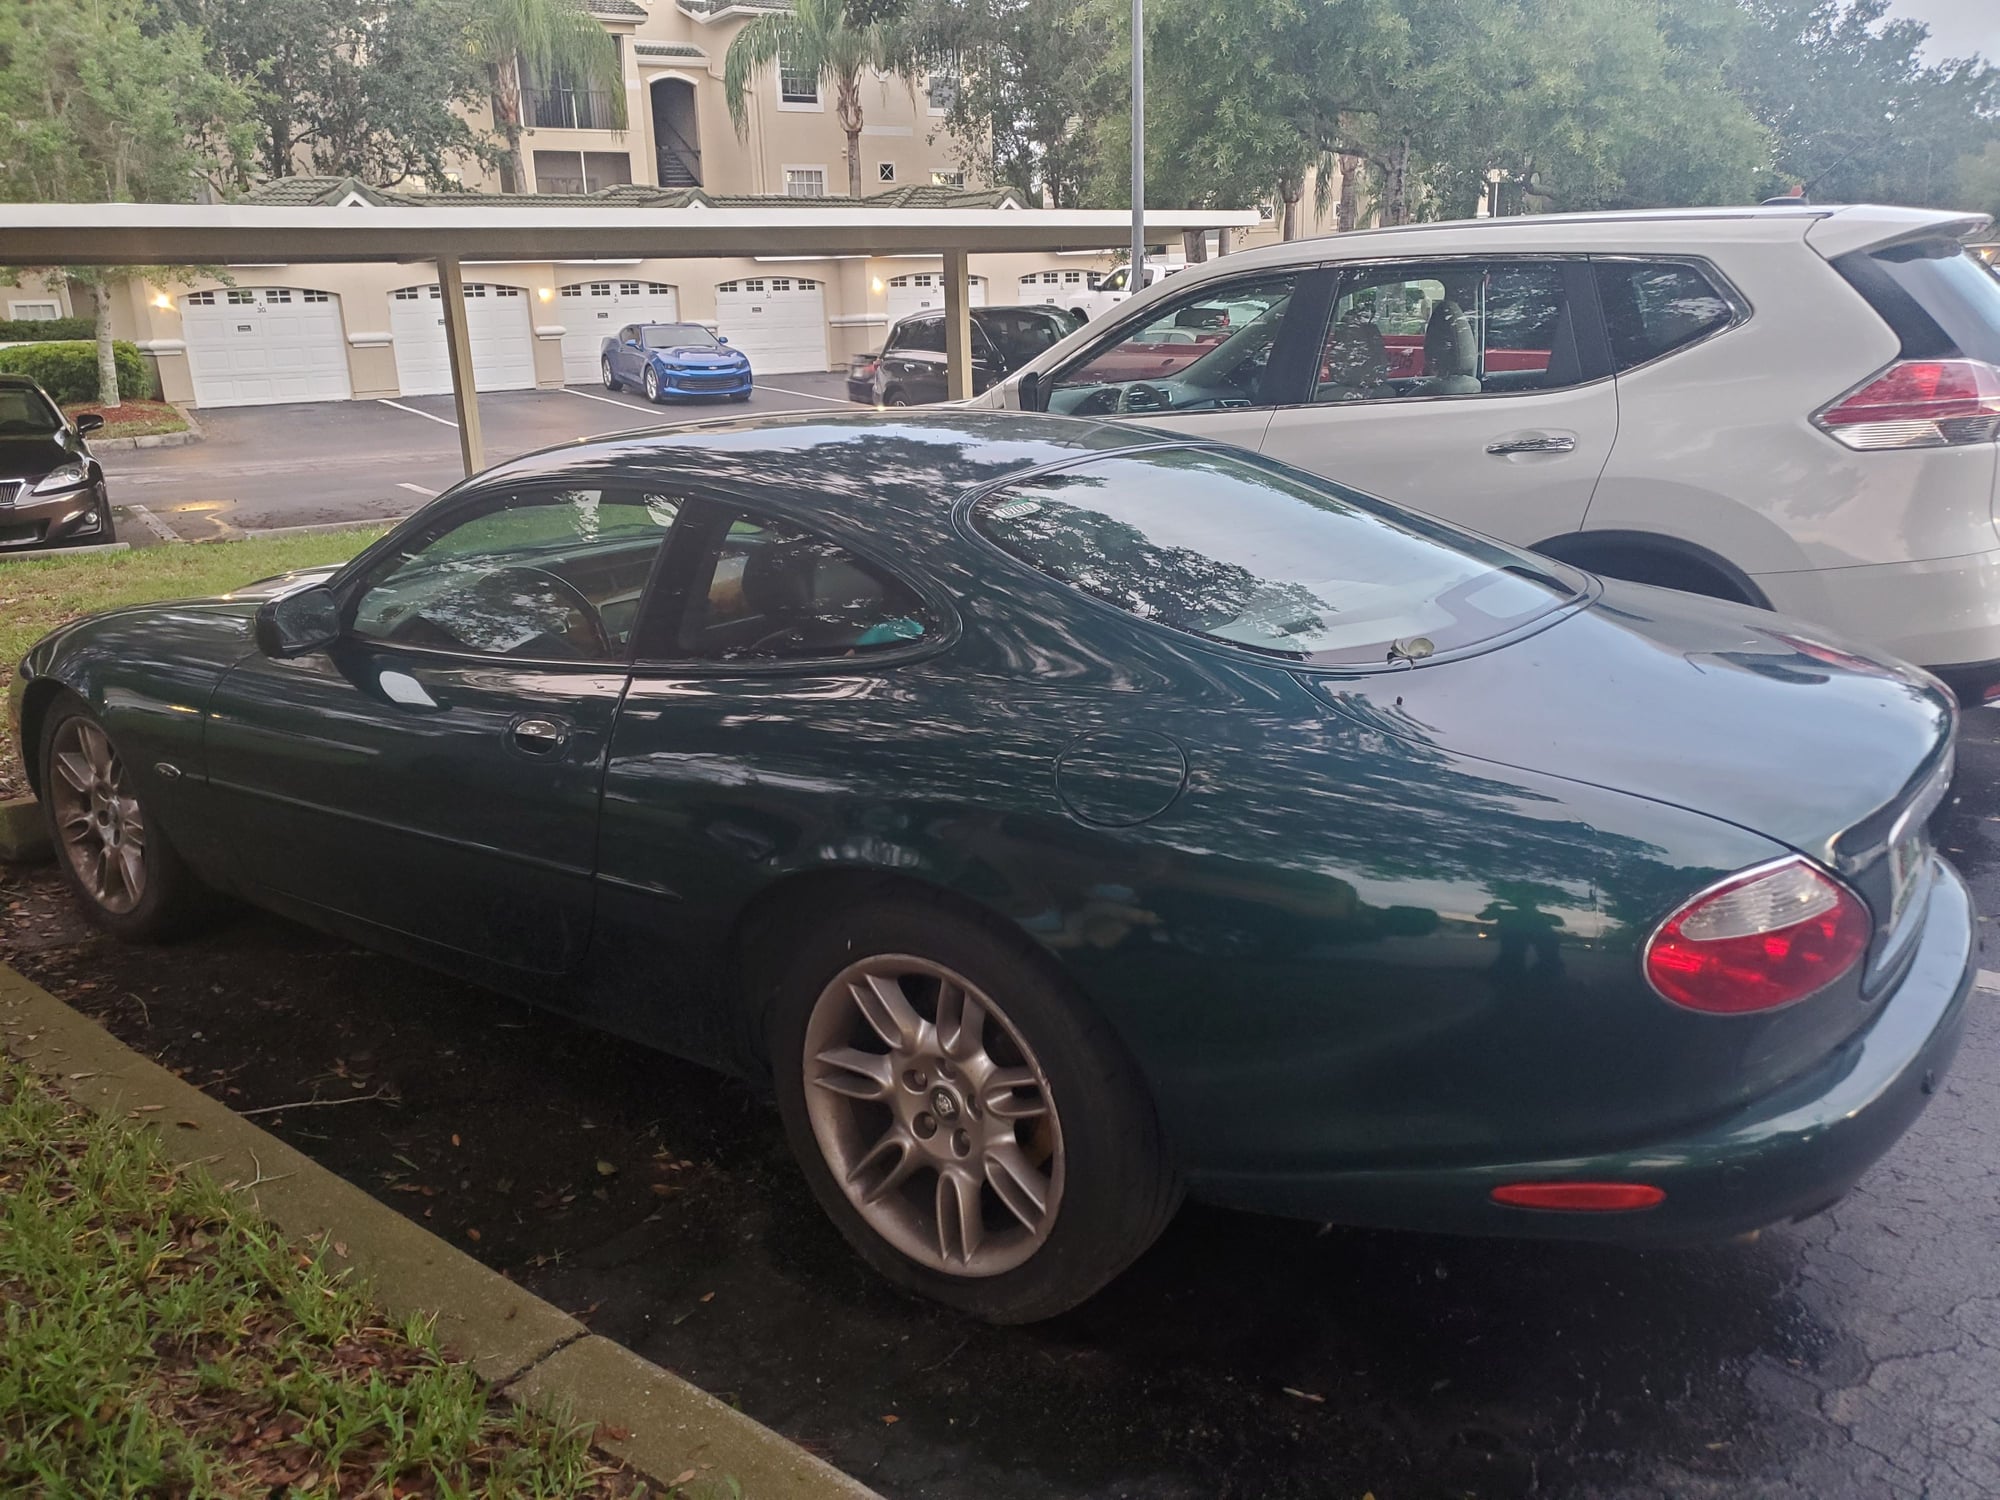 2001 Jaguar XK8 - Needs a new home... - Used - VIN SAJDA41C41NA13986 - 187,000 Miles - 8 cyl - 2WD - Automatic - Sedan - Other - Sarasota, FL 34238, United States